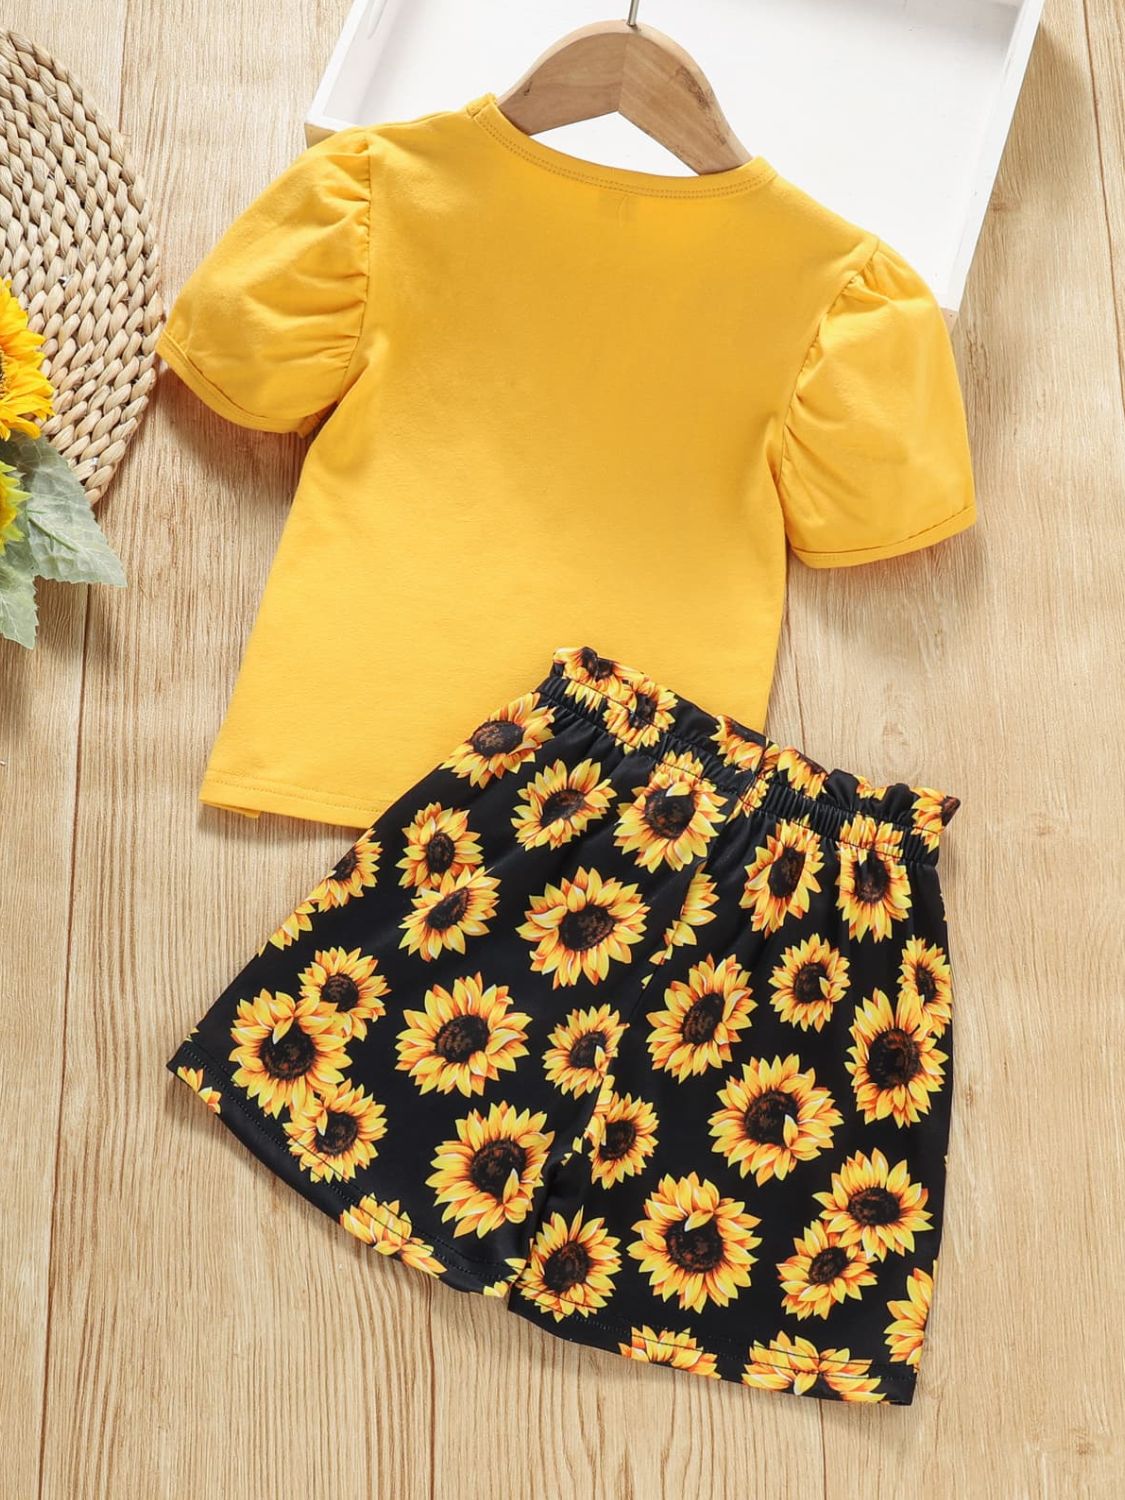 Children’s Girls Slogan Graphic Top and Sunflower Print Shorts Set